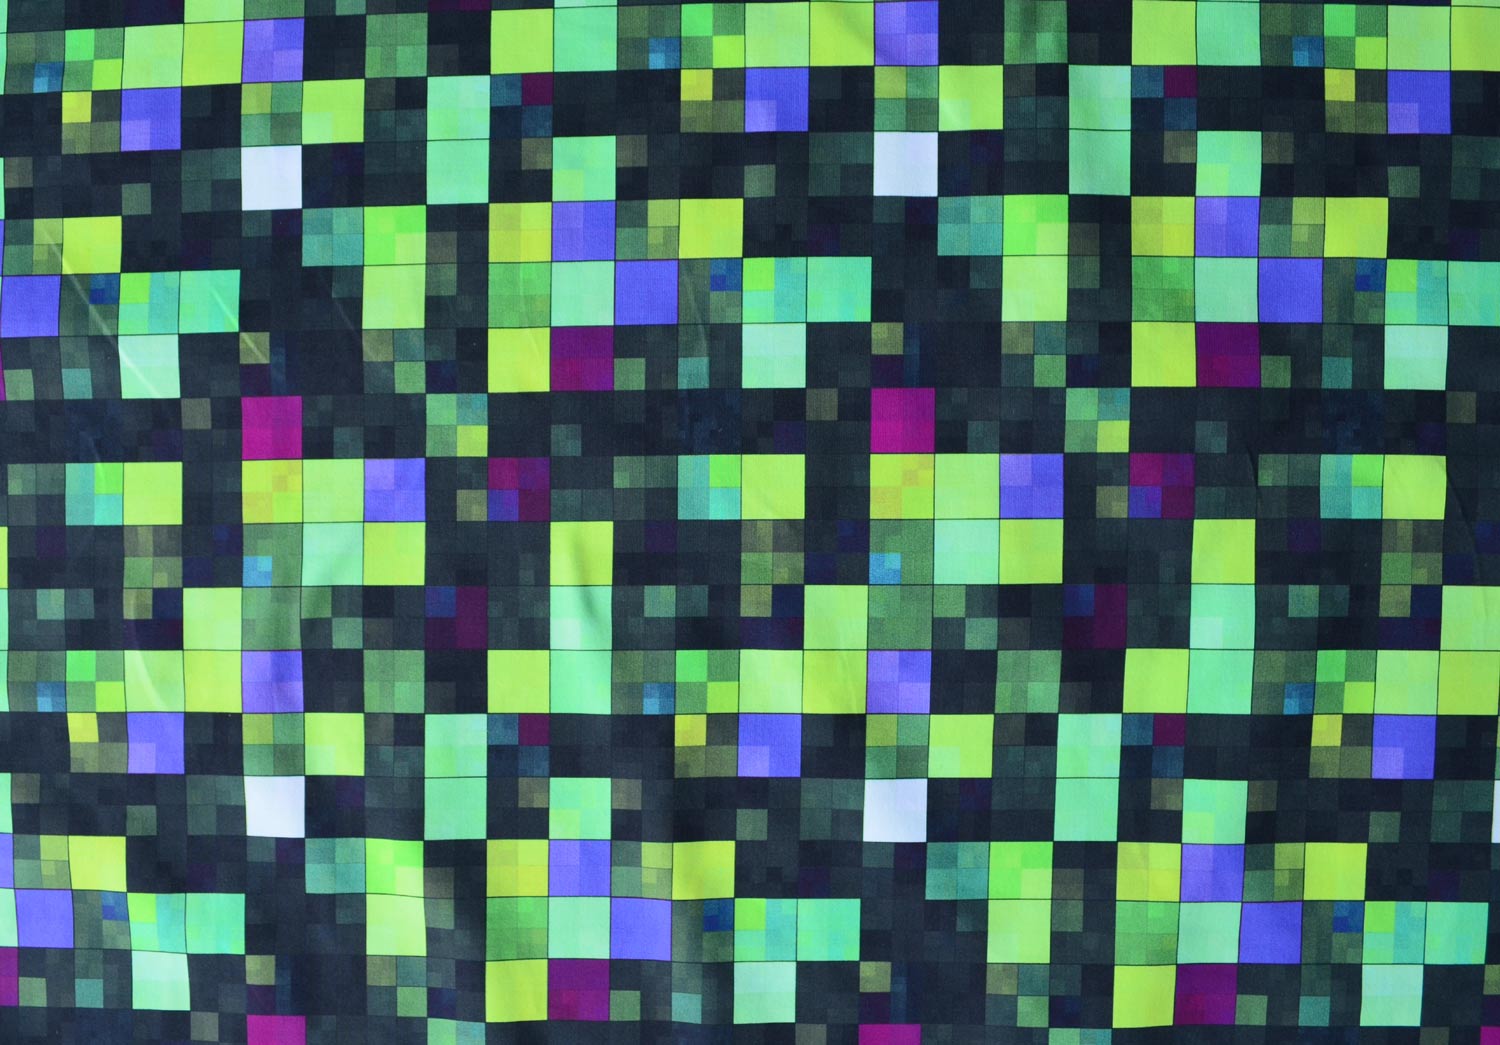 Sewy De Badeware Grun Lila Pixel Muster Naehkurse Schnittmuster Spitzen Stoffe